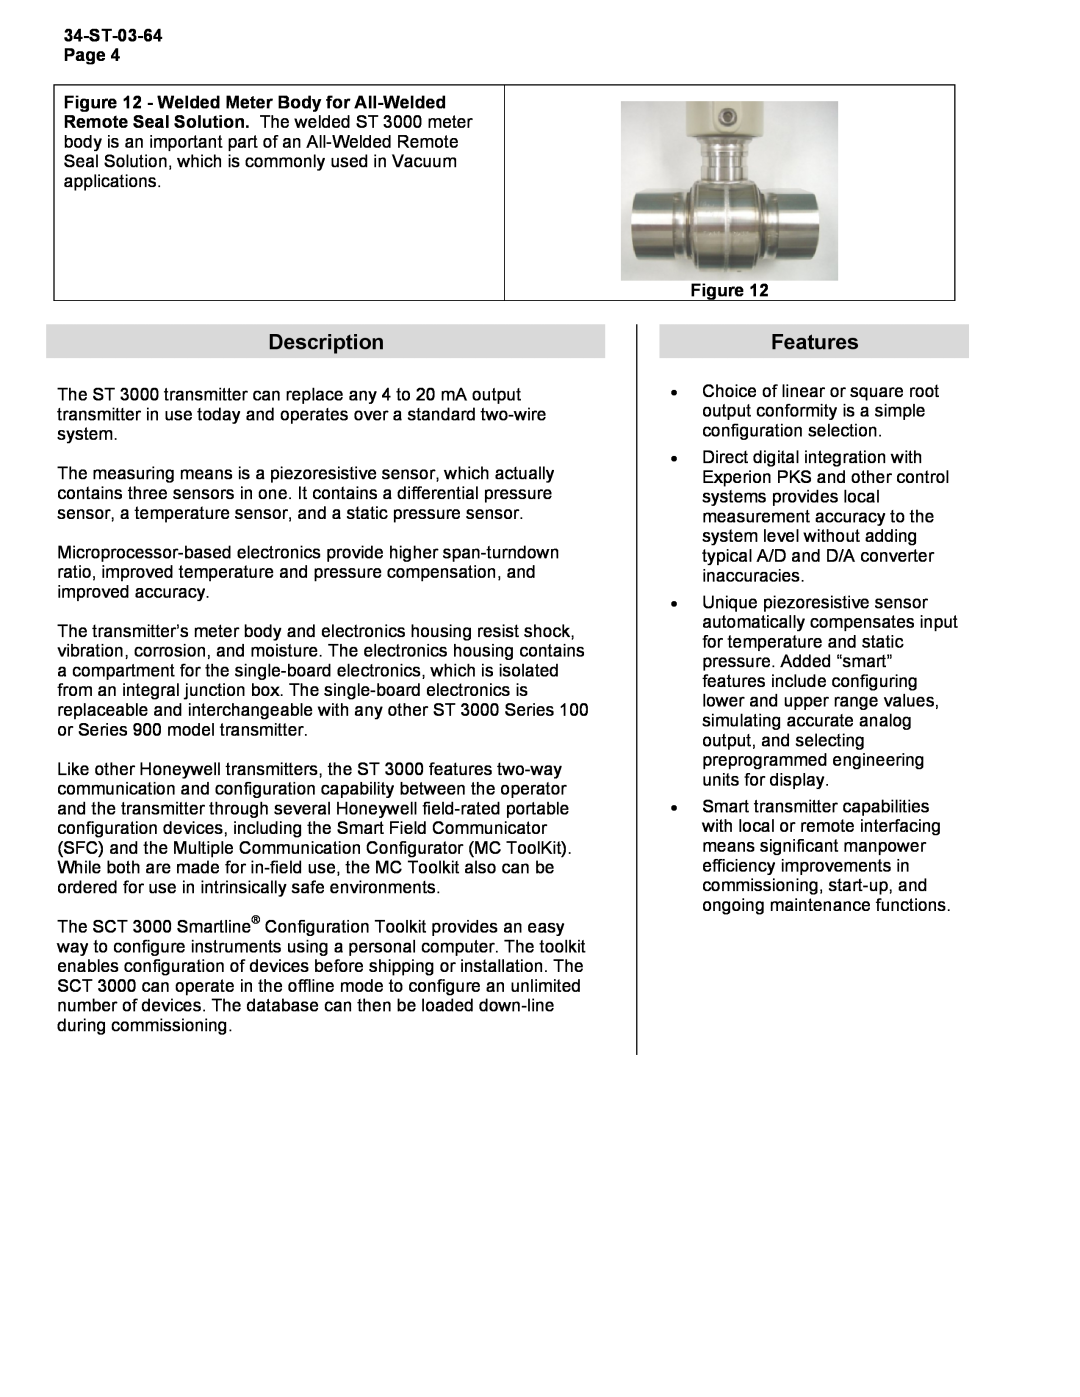 Honeywell STR12D warranty Description, Features, 34-ST-03-64Page 